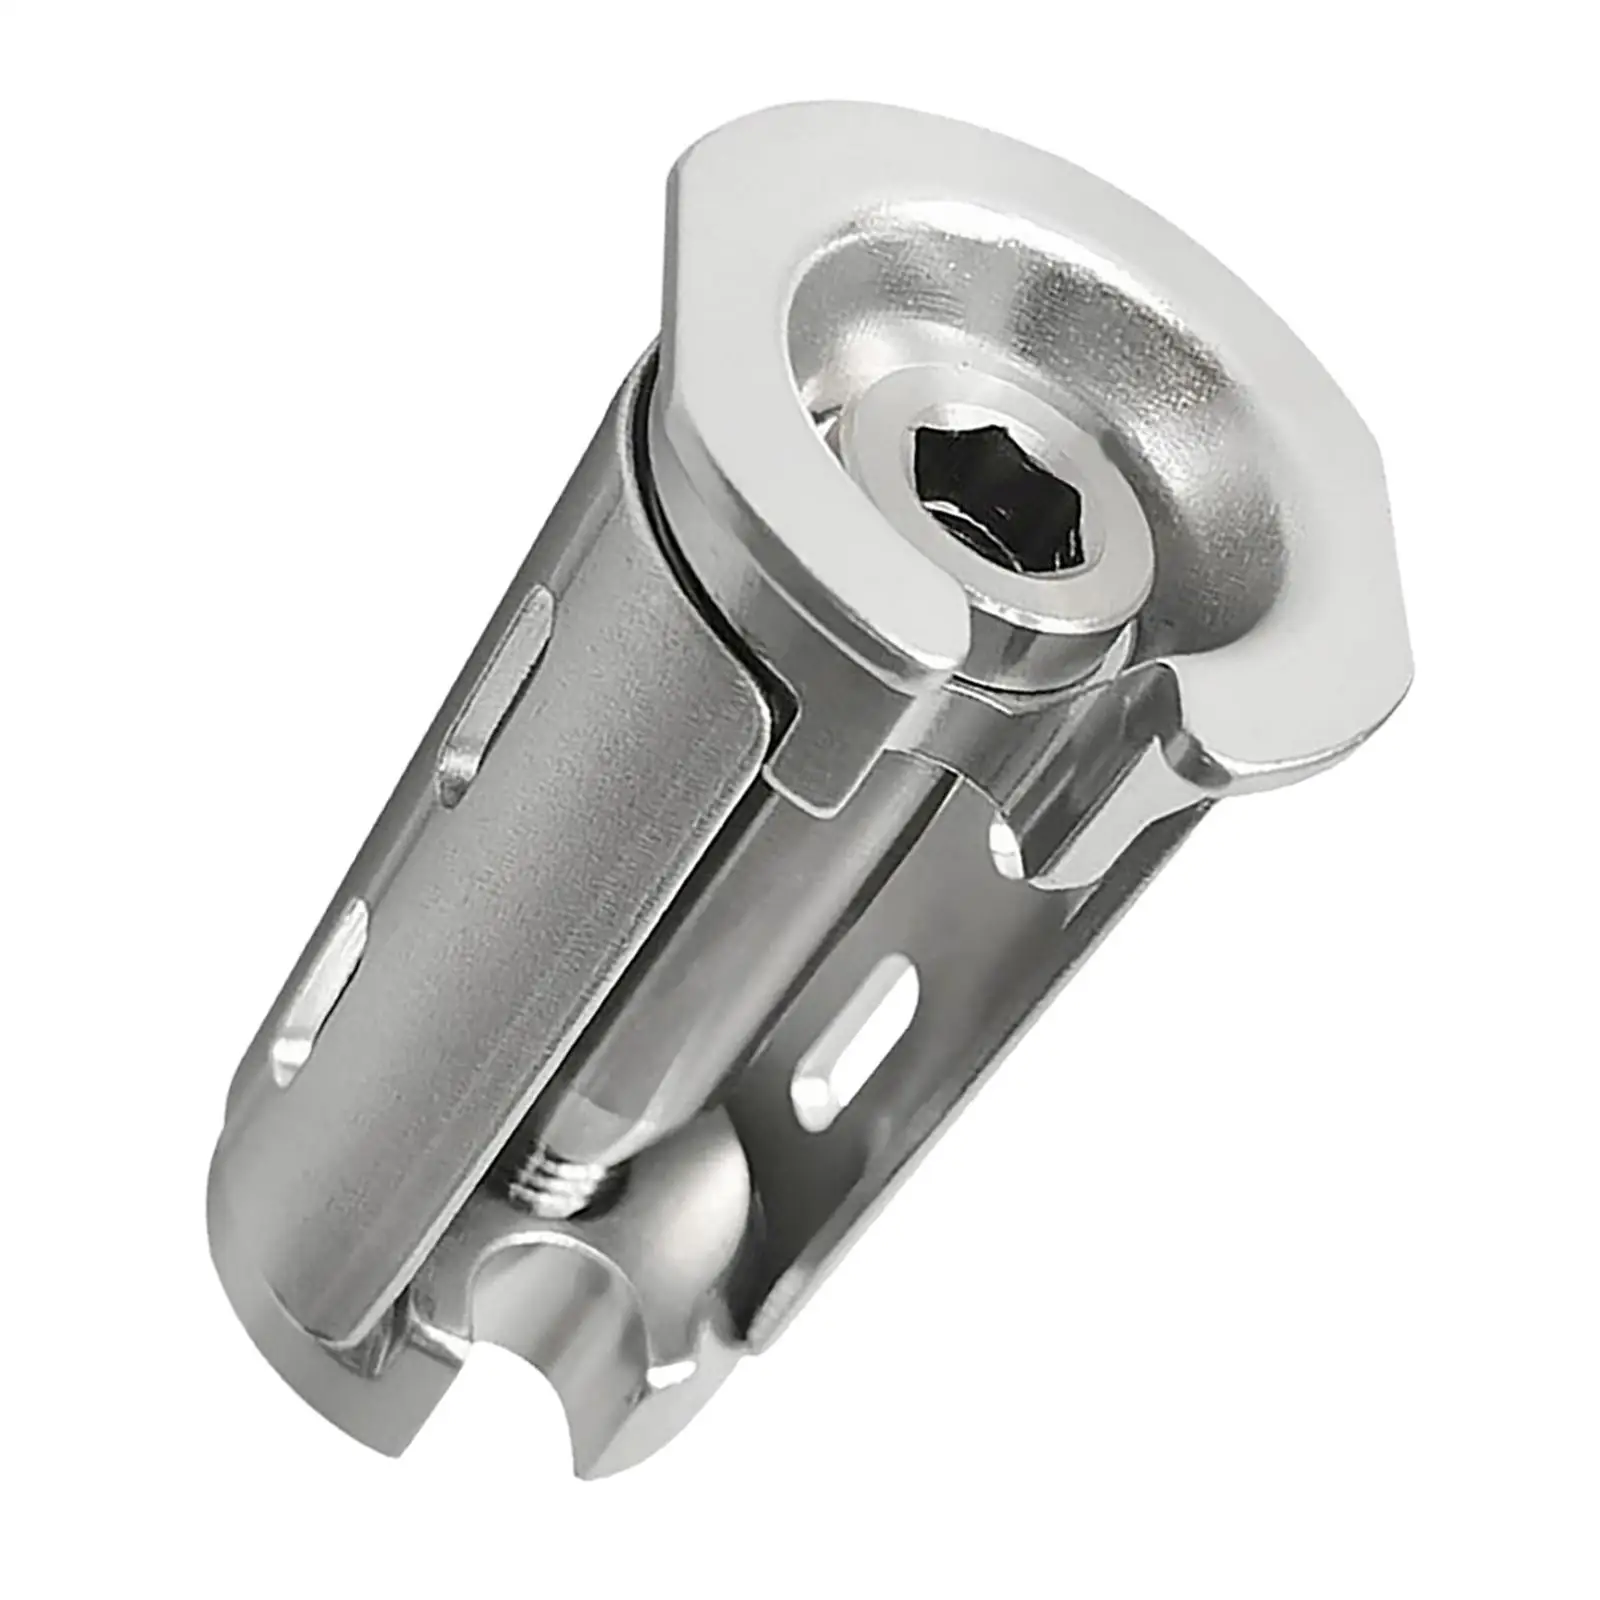  Headset Expander Aluminum  Expanding Plug Bicycle Headset Screw